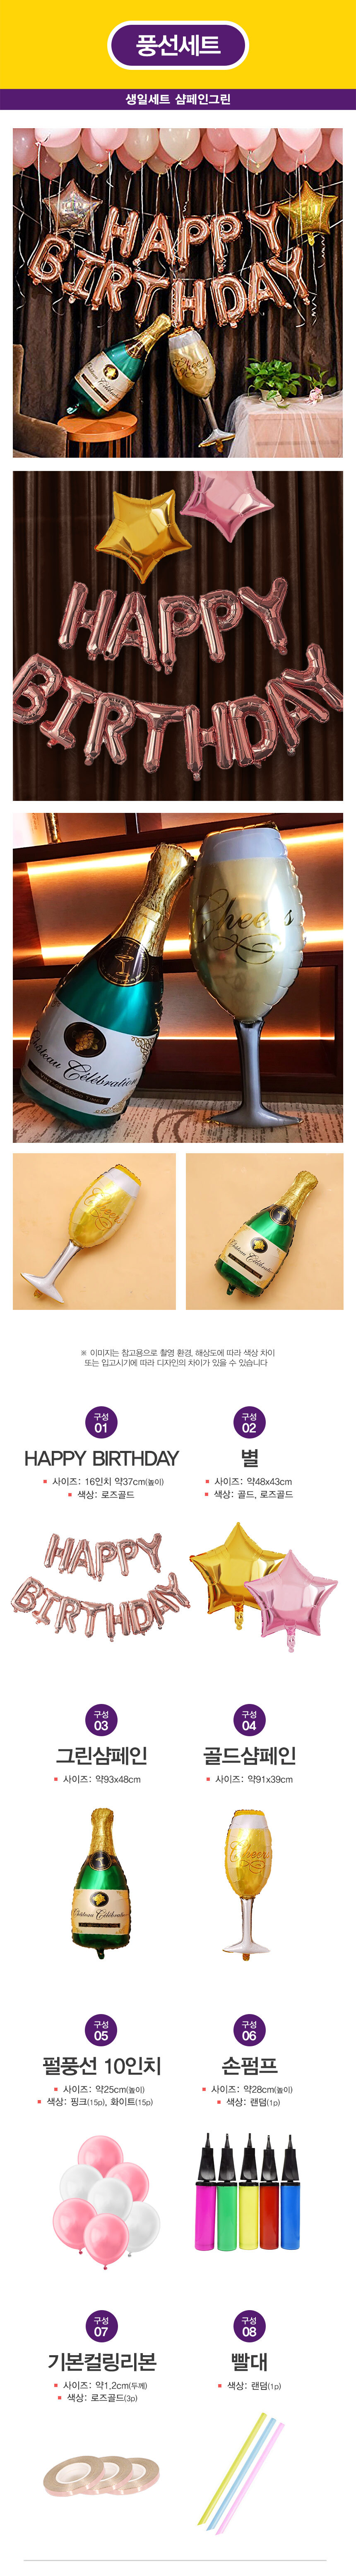 birthdaySet_champagneGreen.jpg